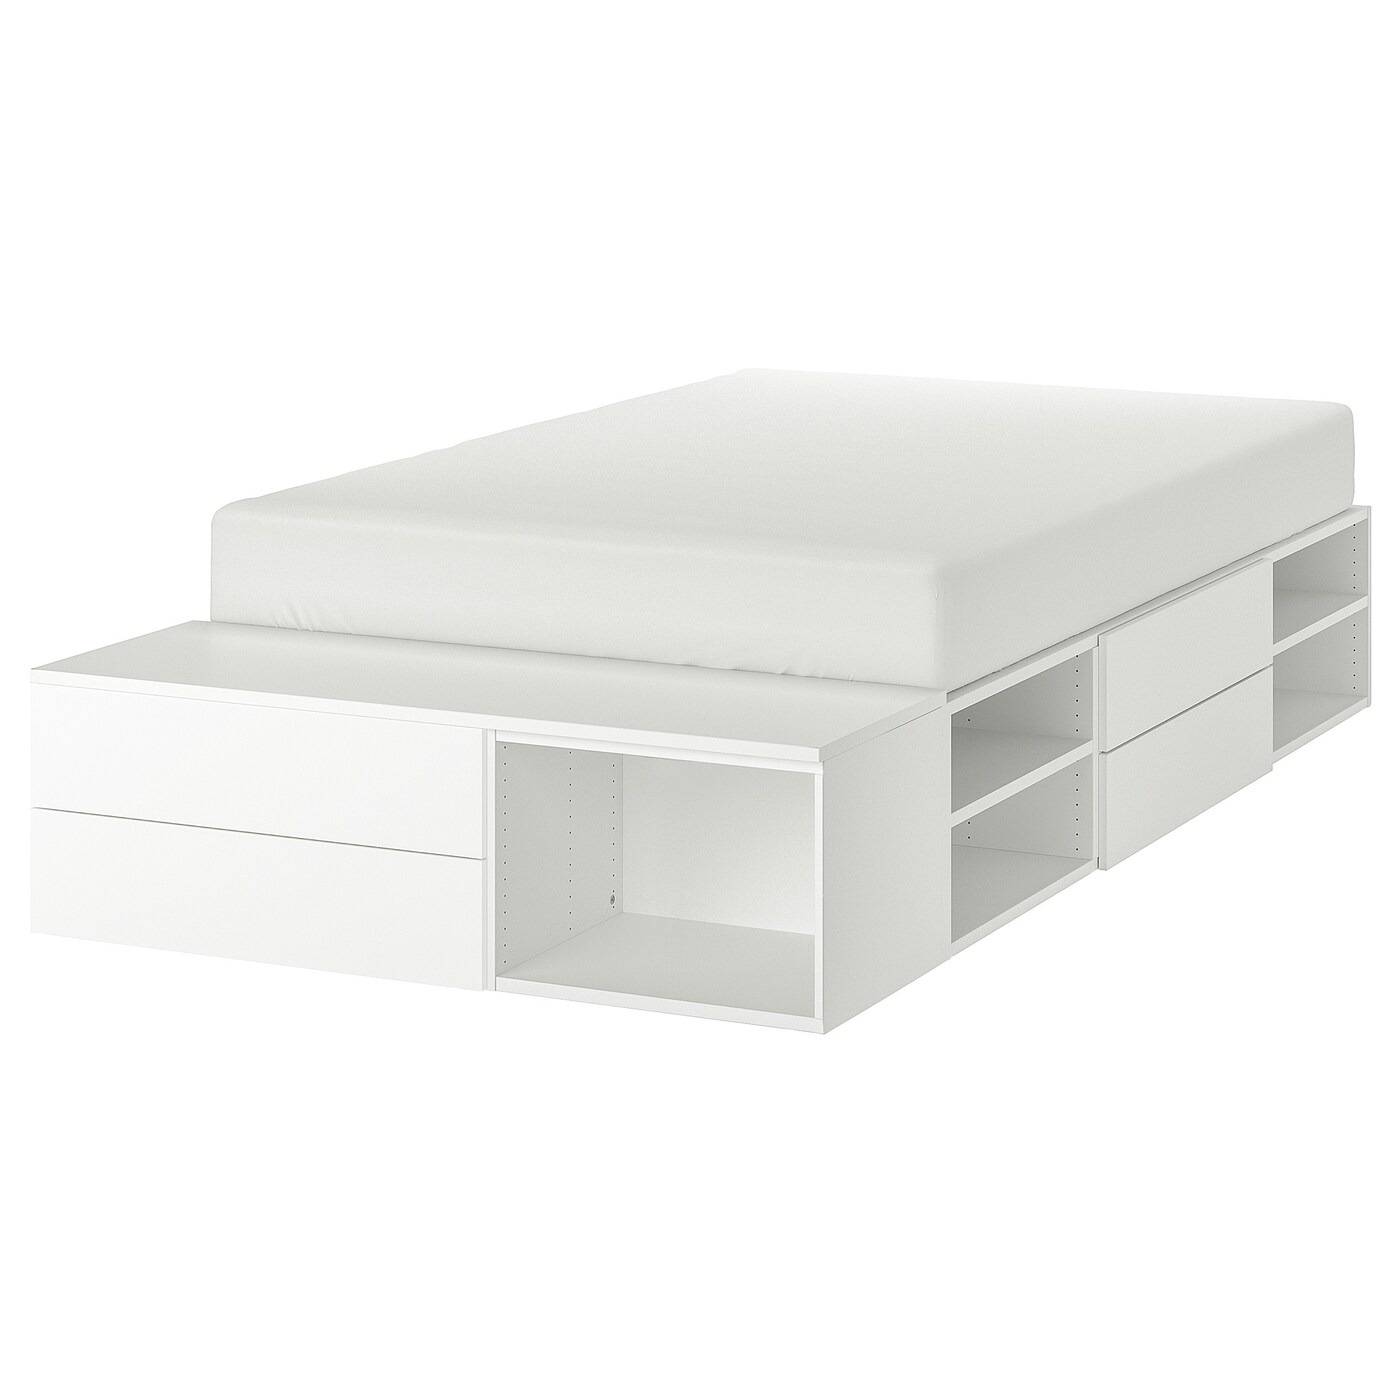 Каркас кровати с 4 ящиками - IKEA PLATSA, 200х140 см, белый, ПЛАТСА ИКЕА